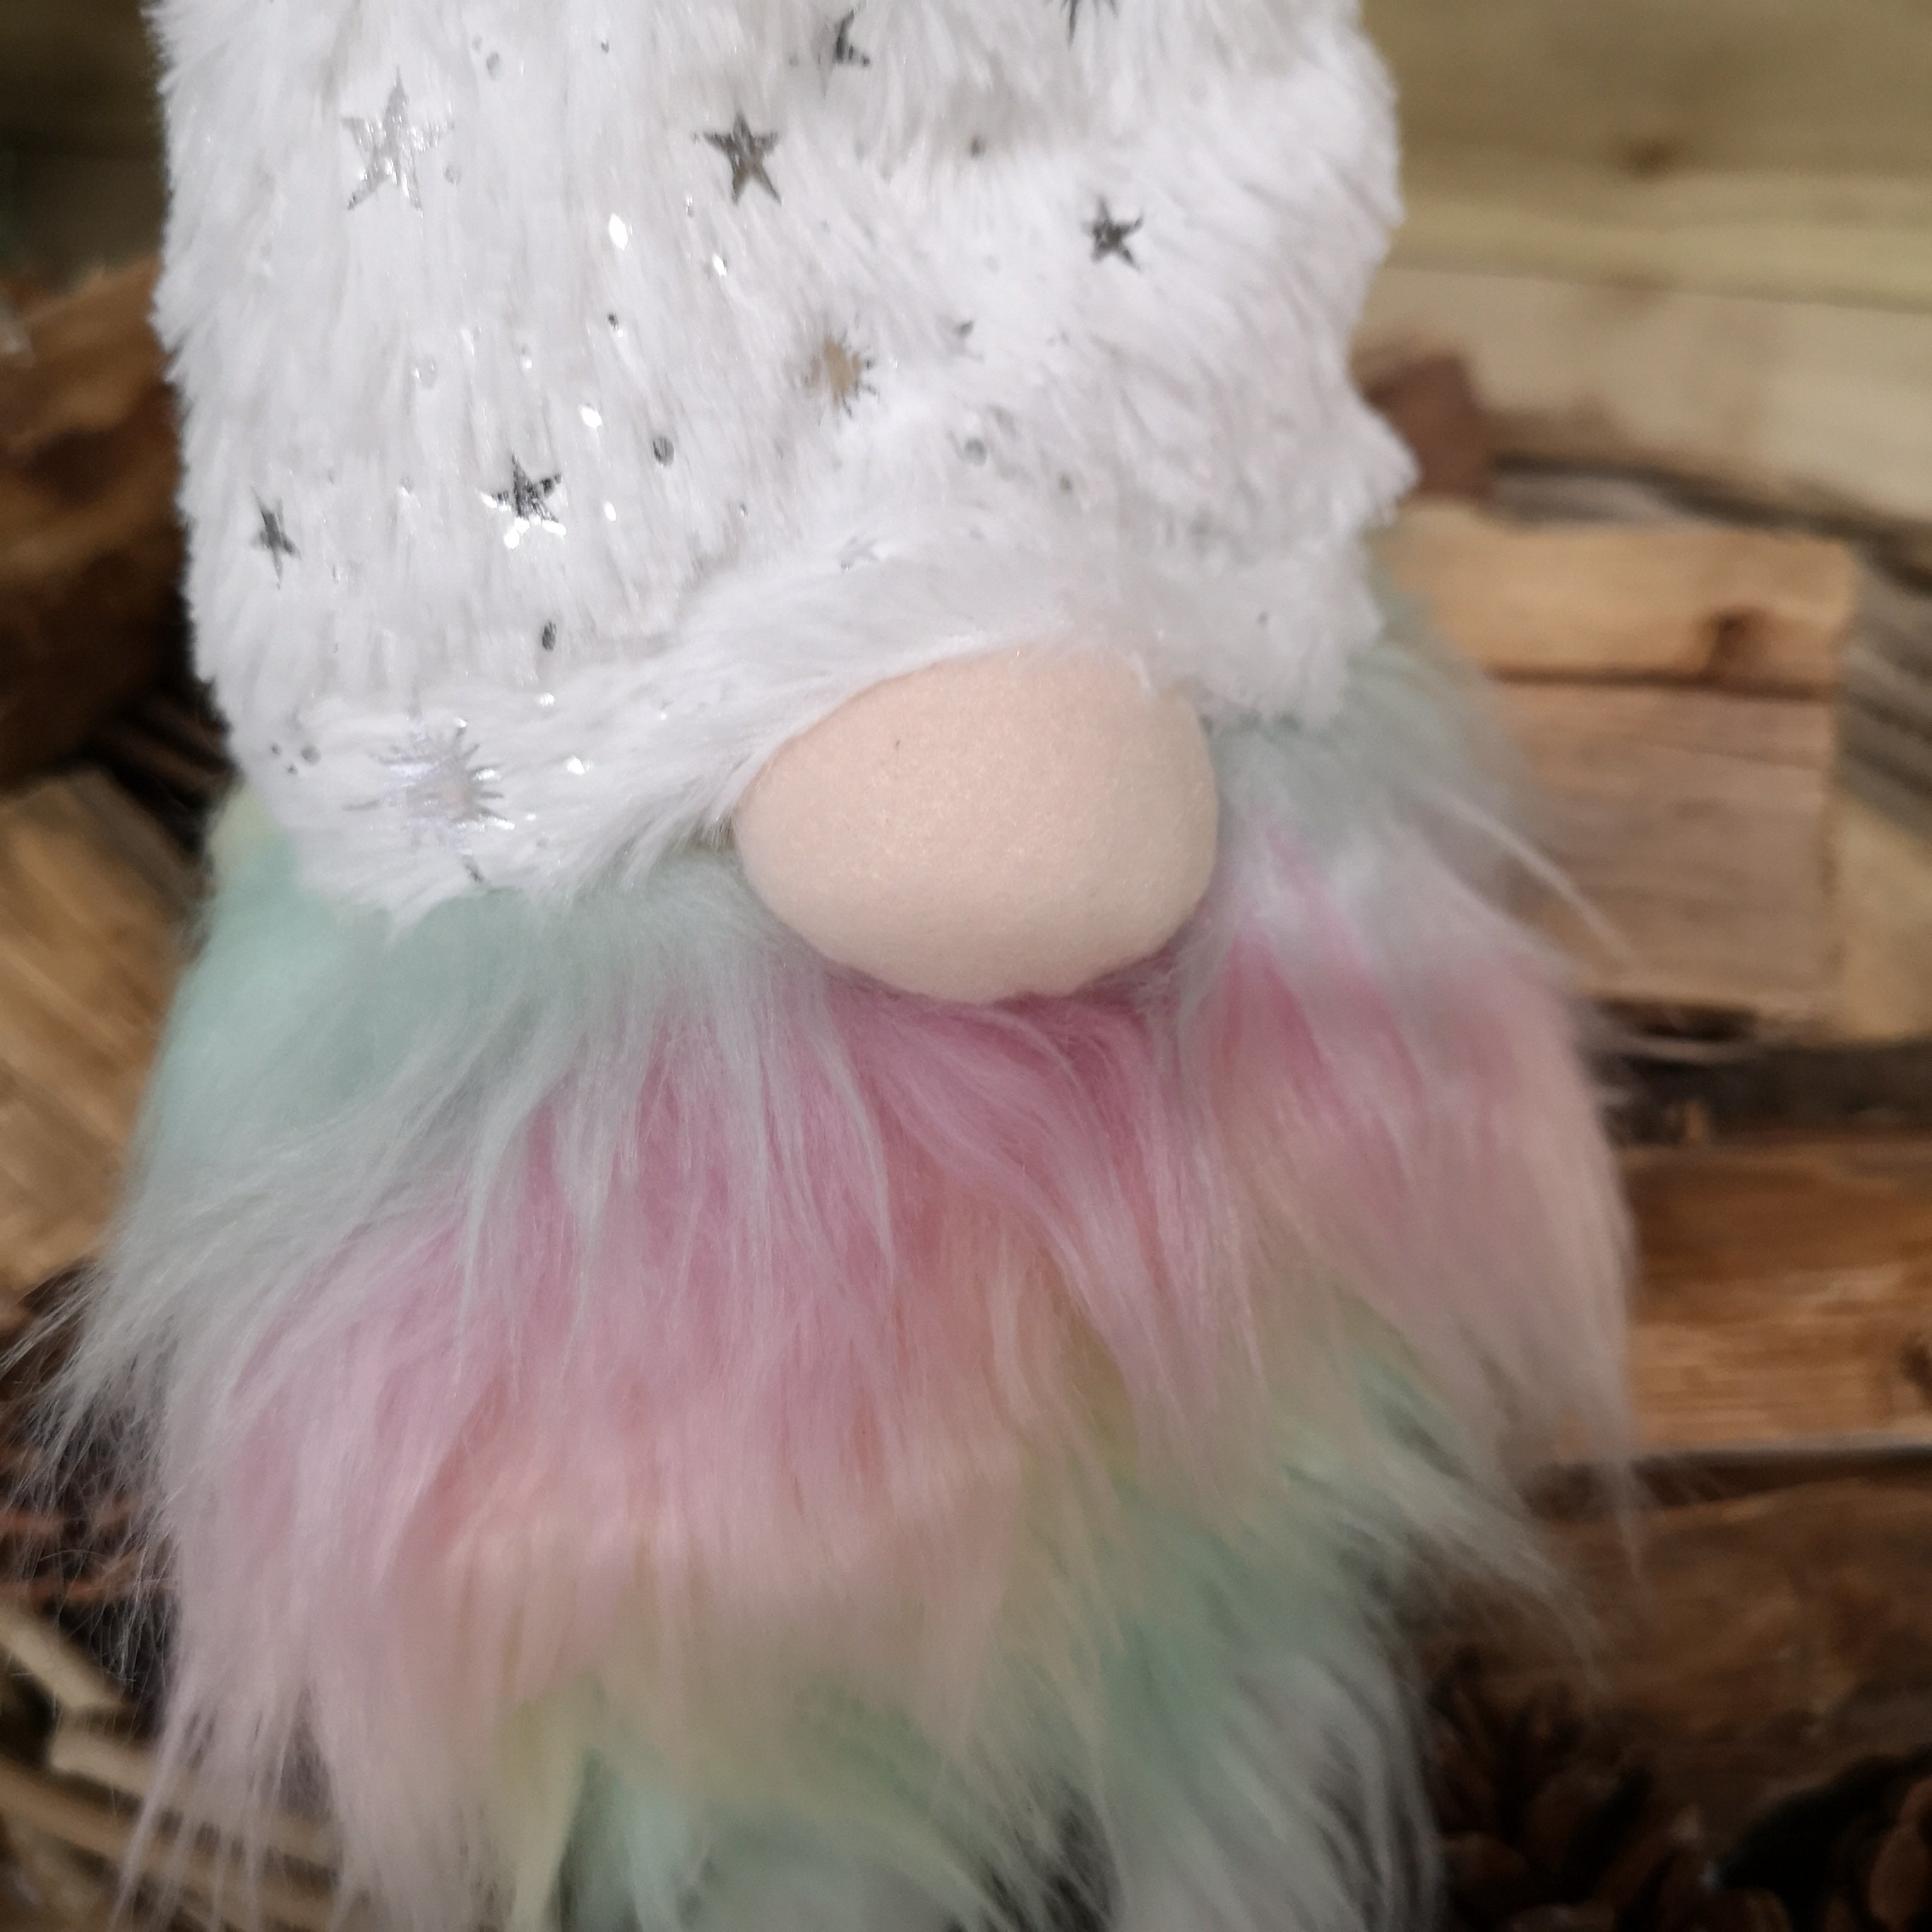 70cm Festive Christmas Rainbow Haired Plush Gonk Dangly Legs & Starry Hat